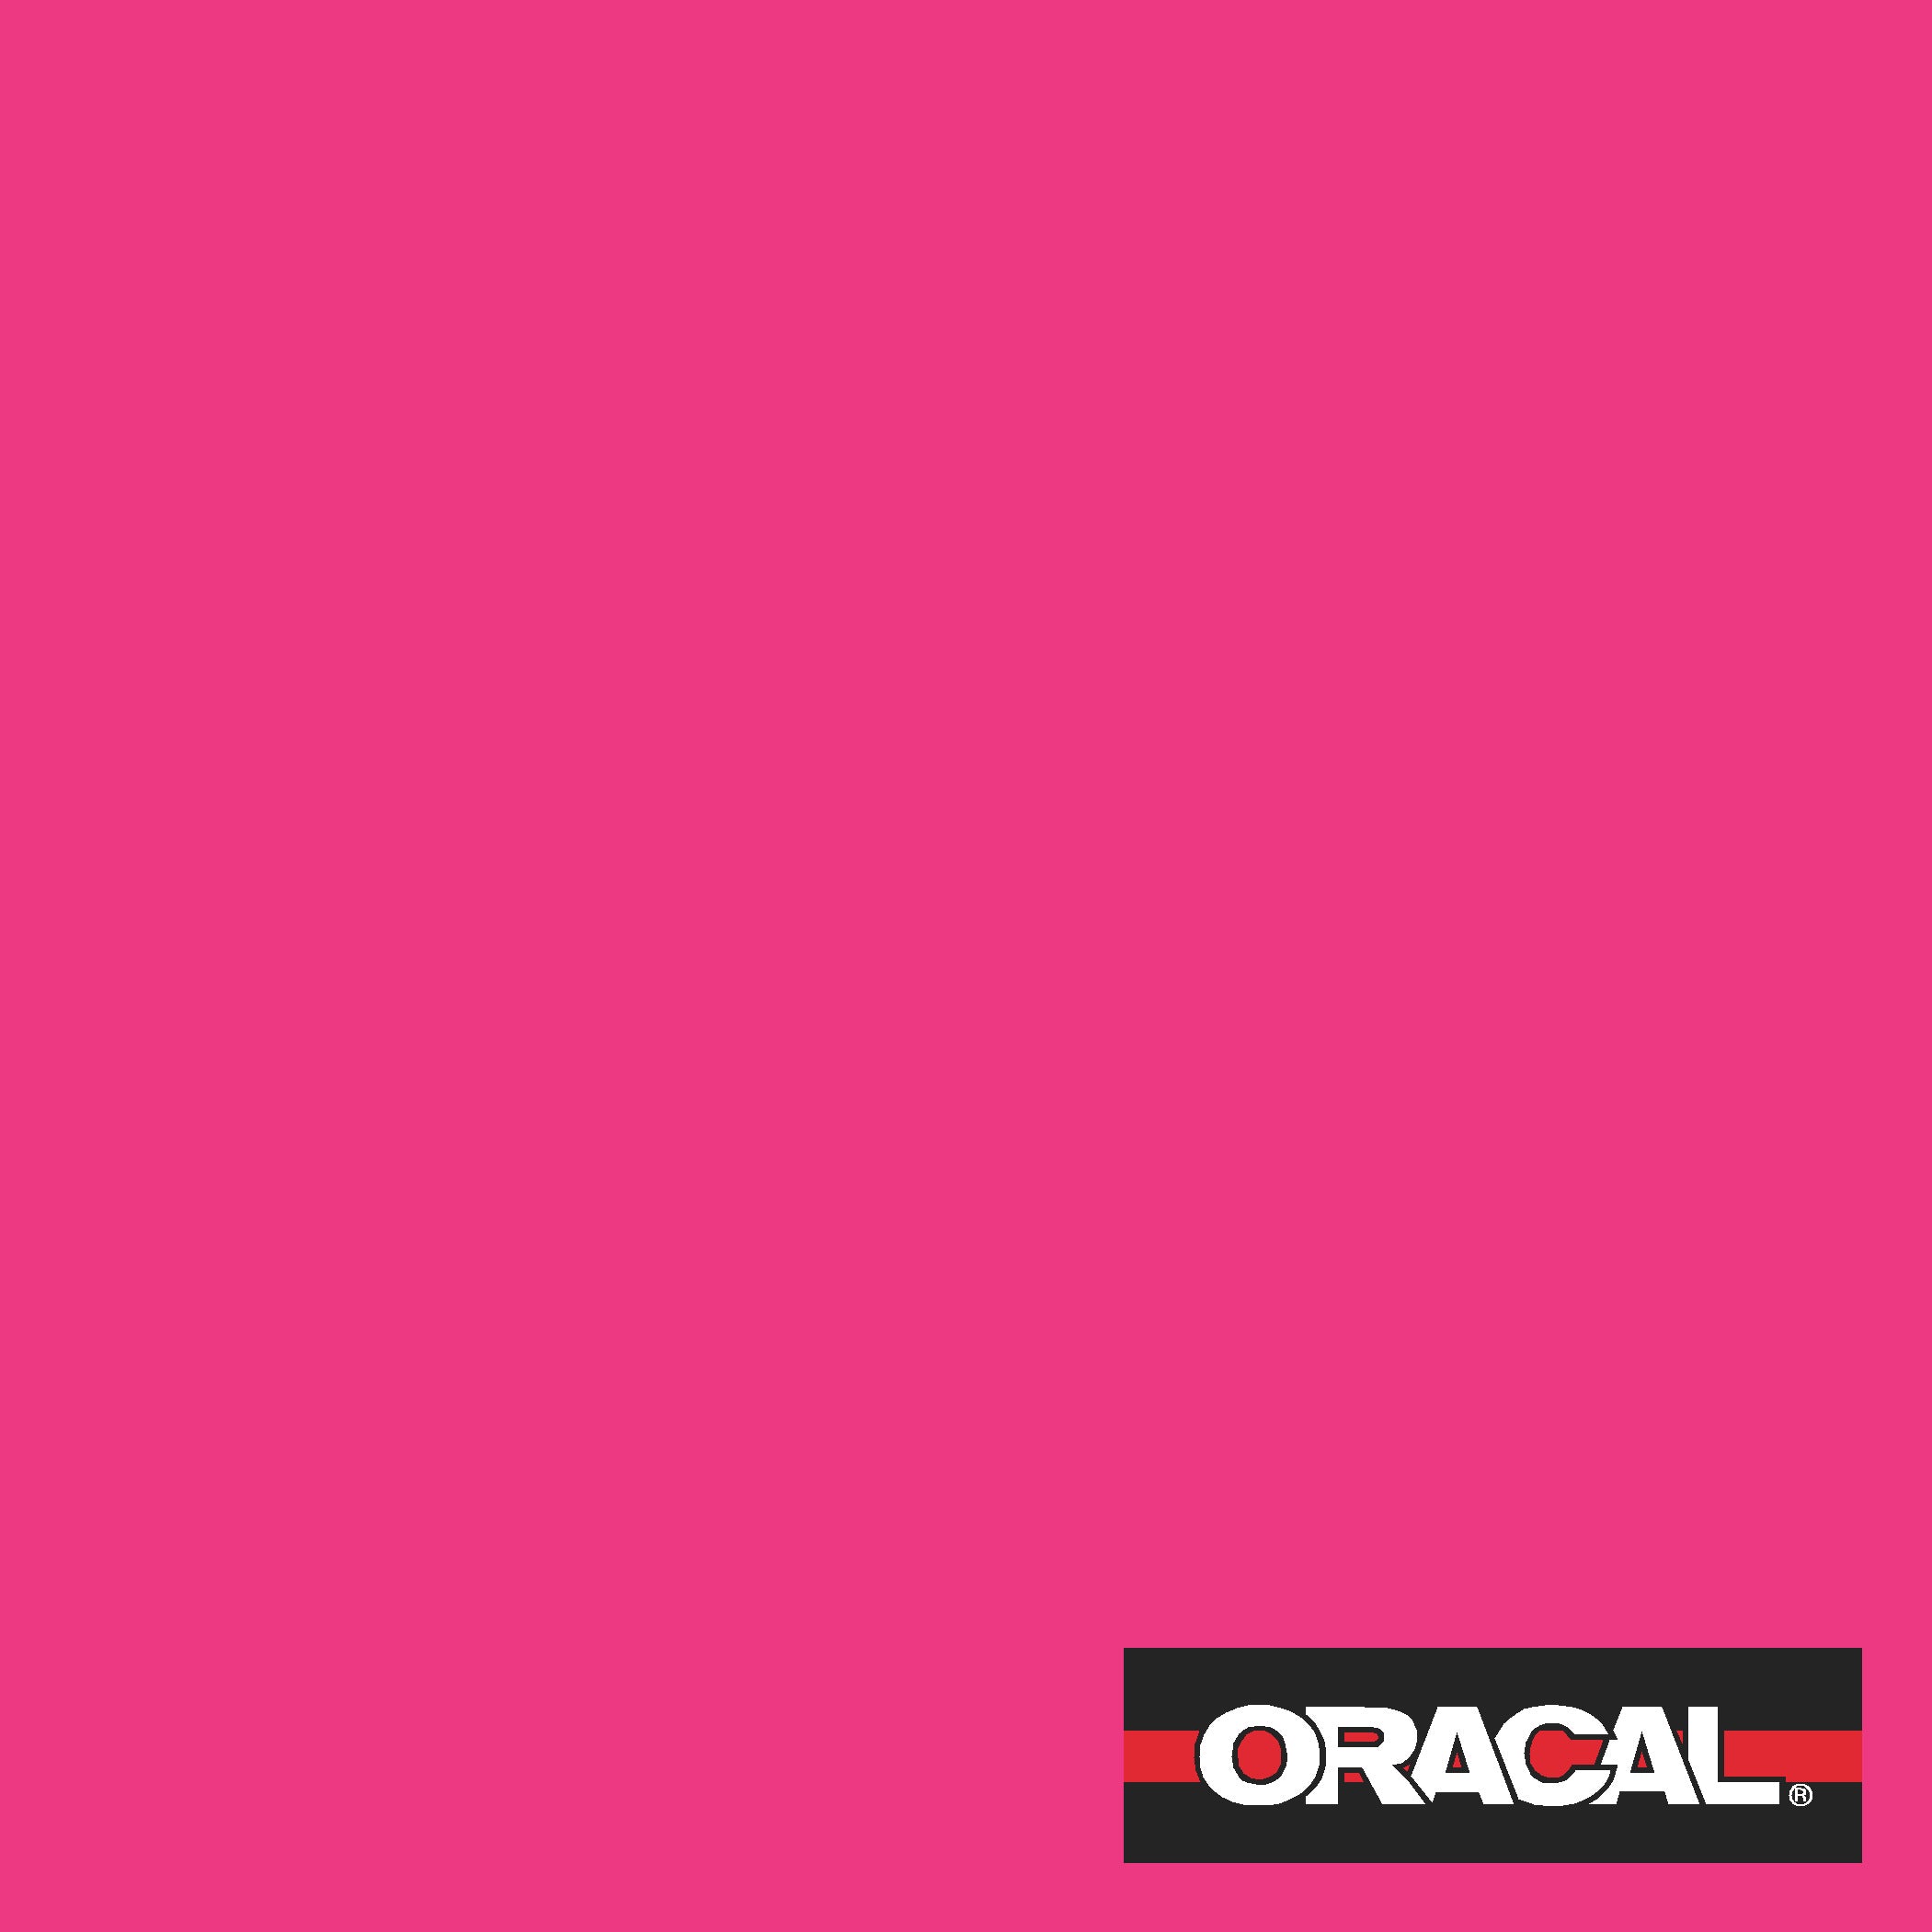 15 wide Oracal 651 Magenta 041 Pink vinyl by-the-foot